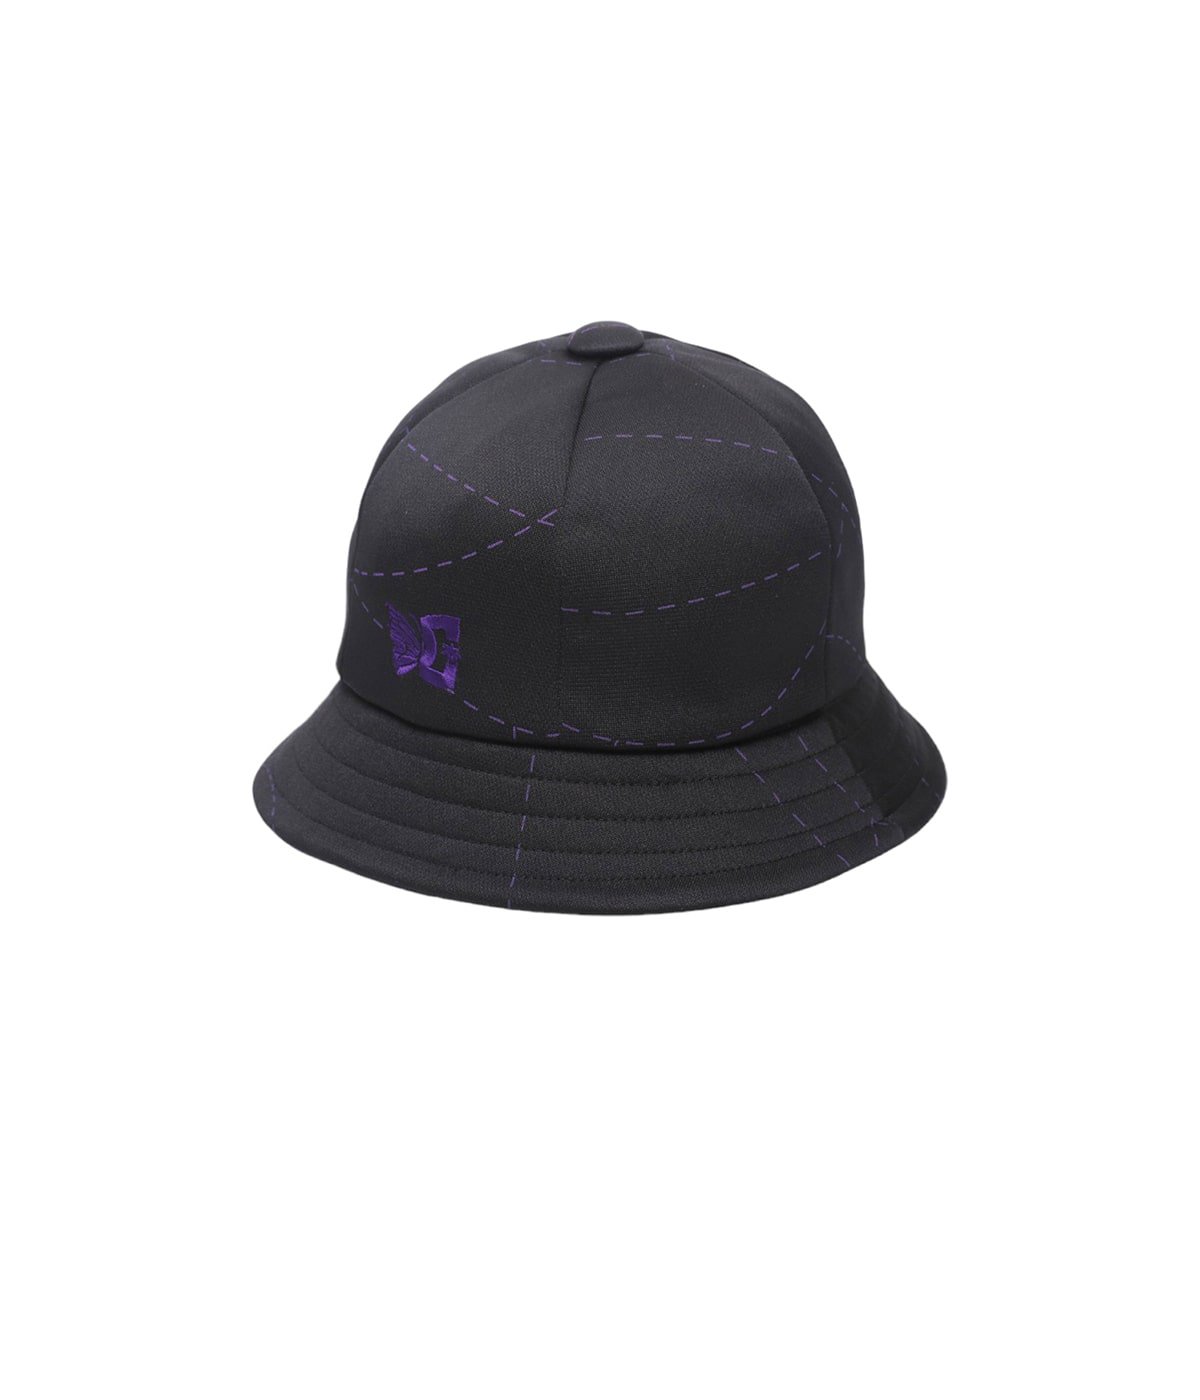 Bermuda Hat - Poly Smooth / Printed | NEEDLES(ニードルズ) / 帽子 